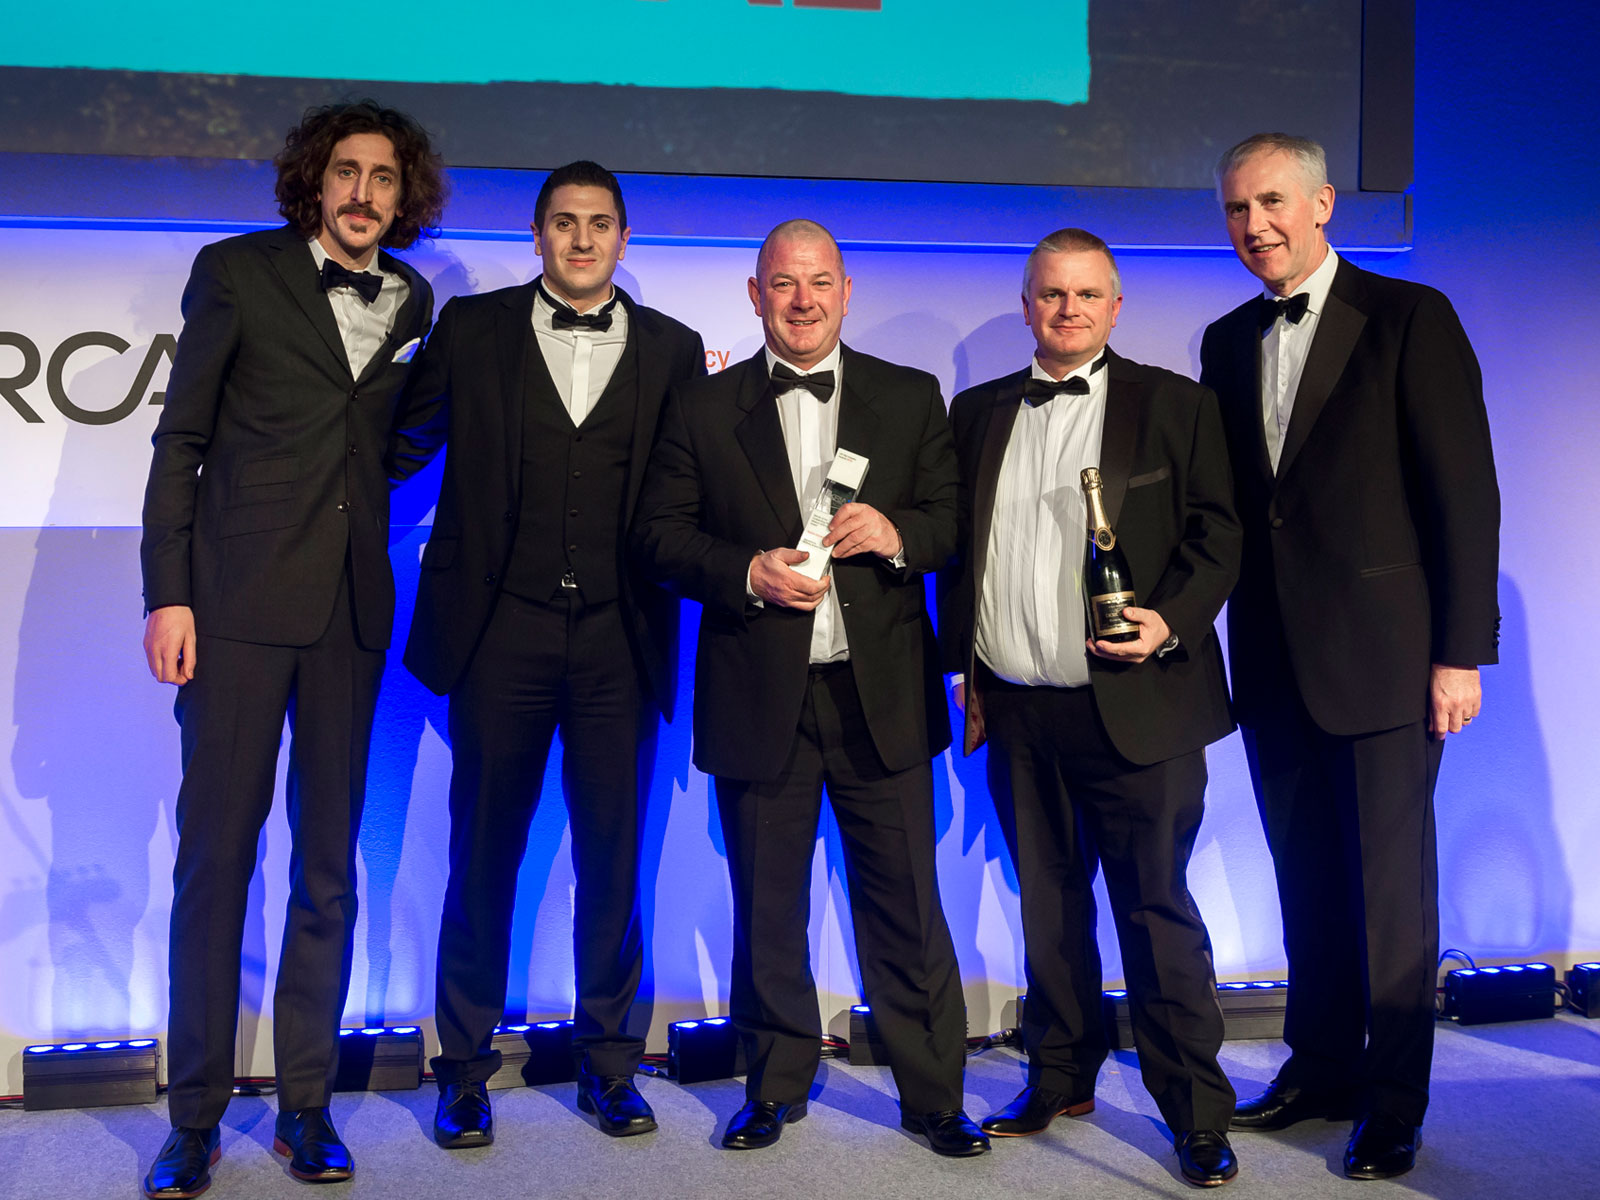 Taziker team receiving award at UK Rail Industry Awards.